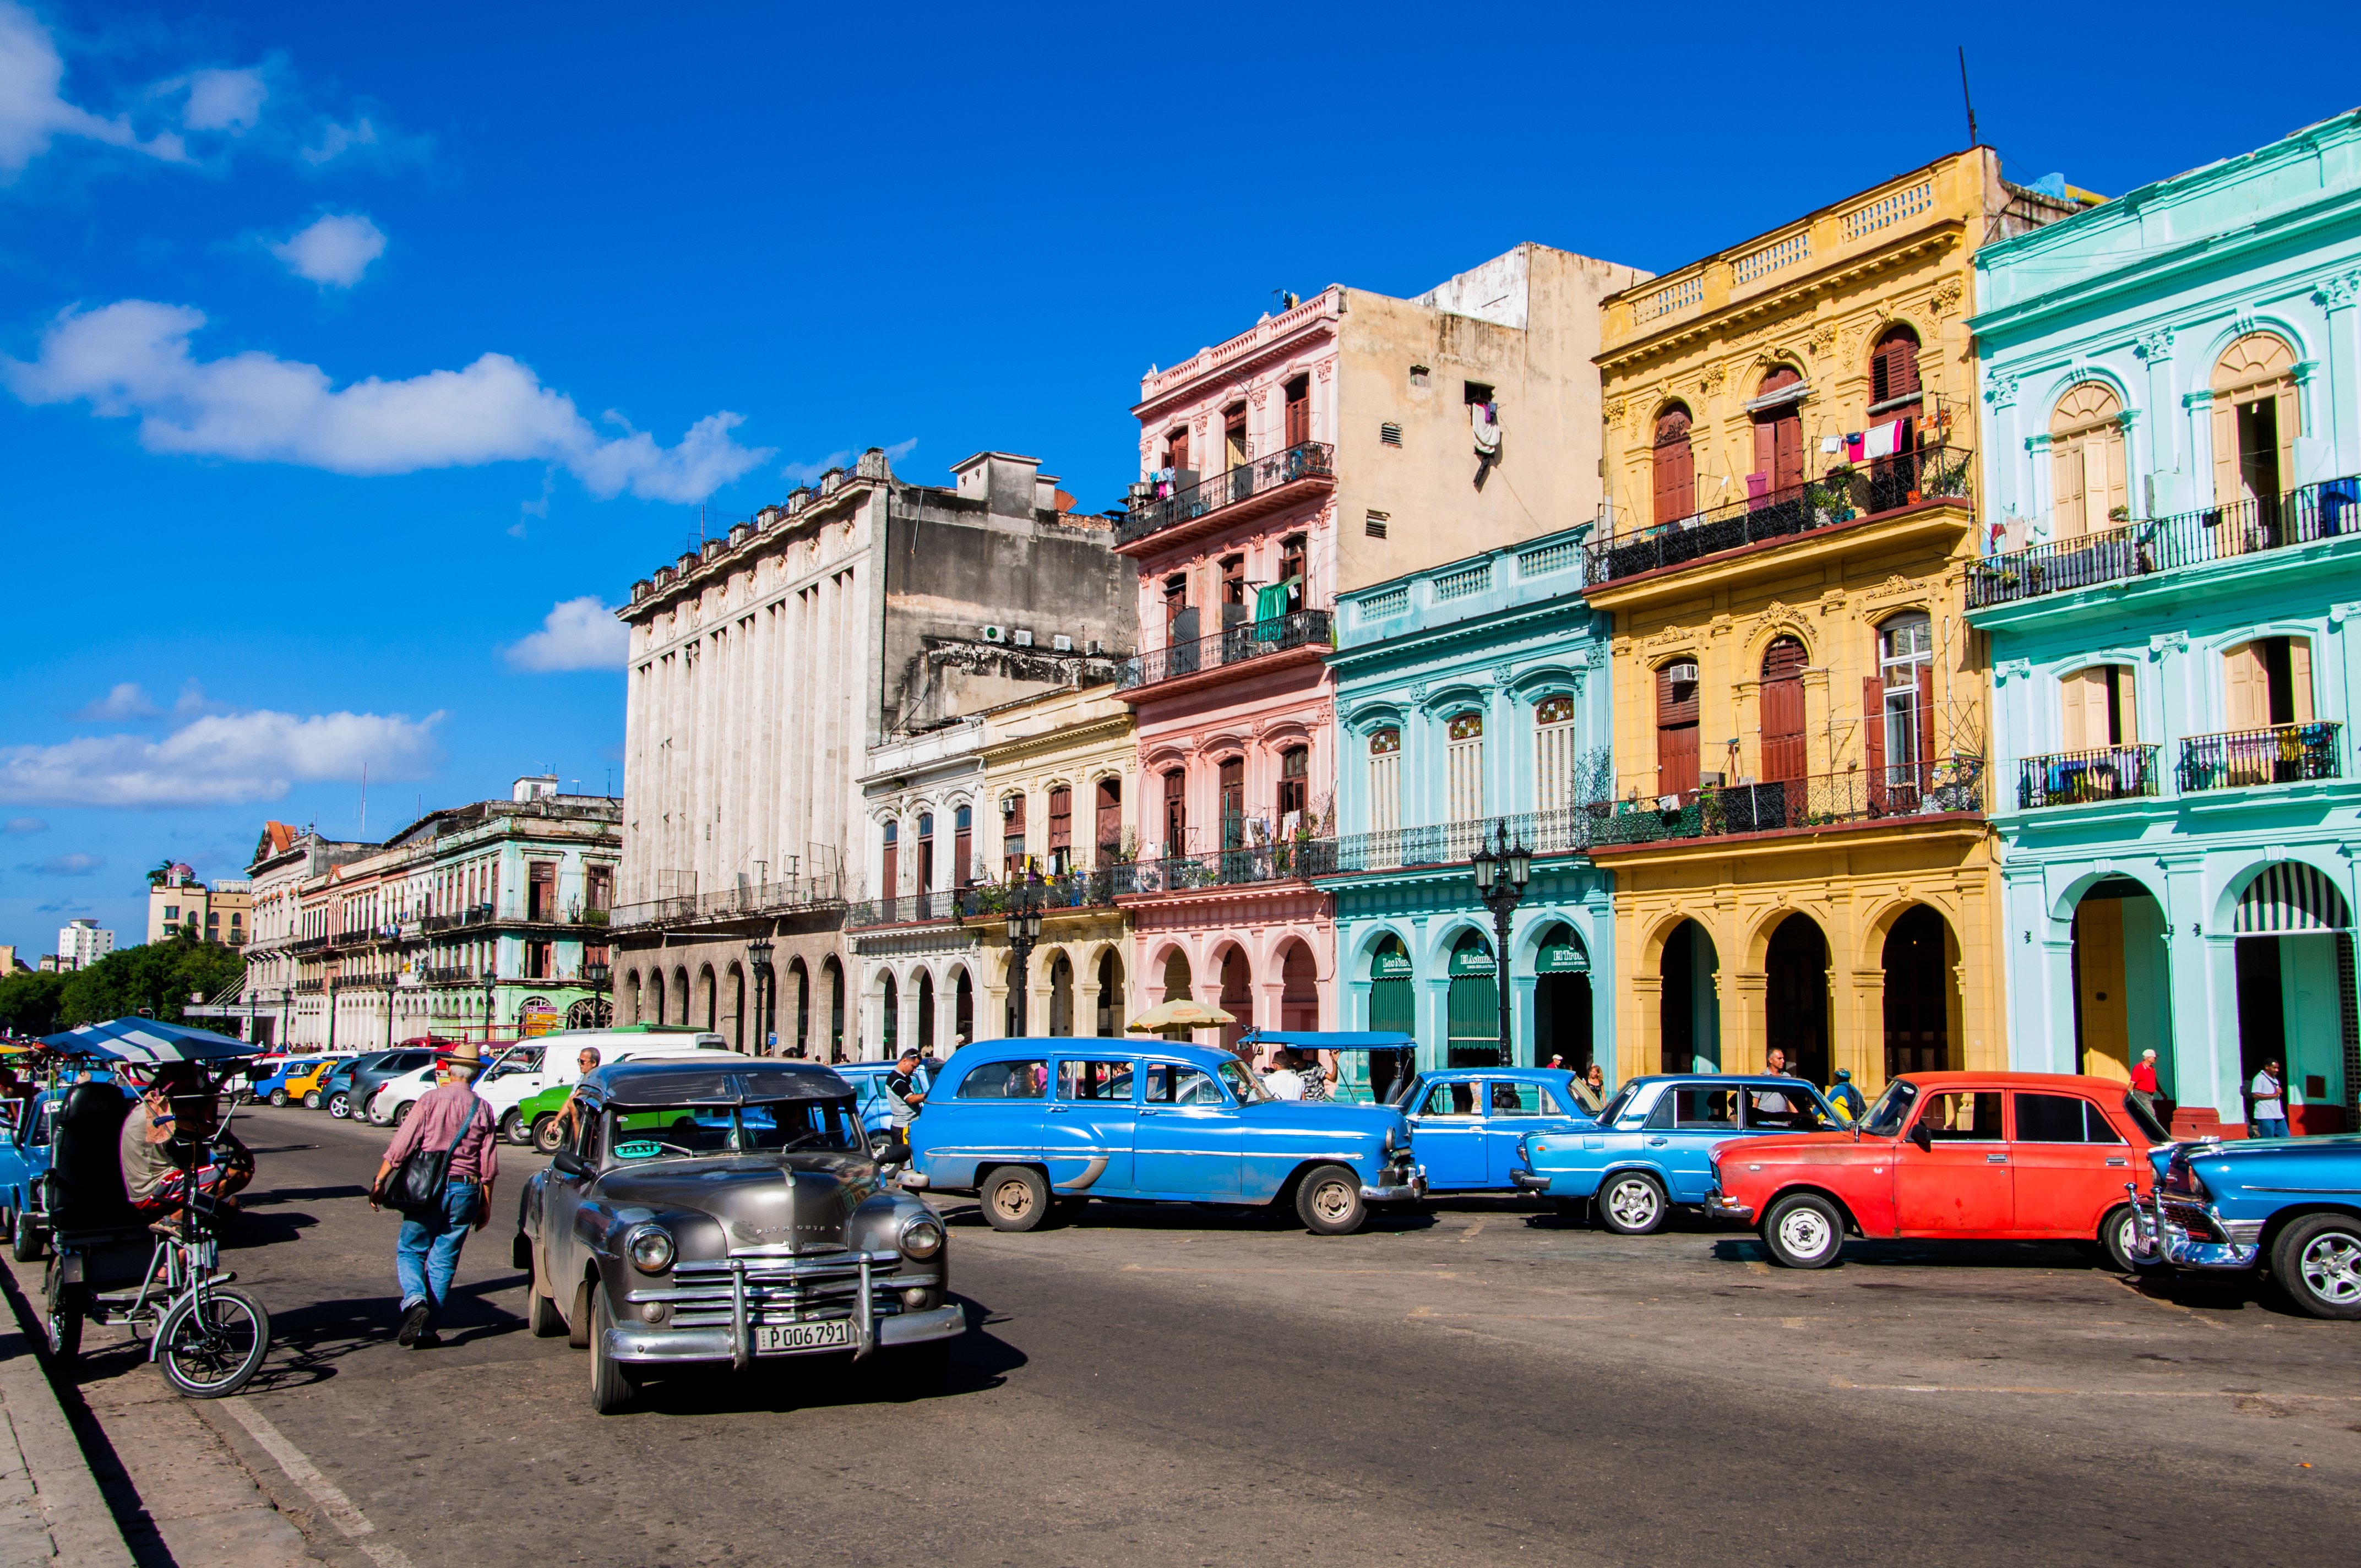 Cuba - Travel Here in 2017